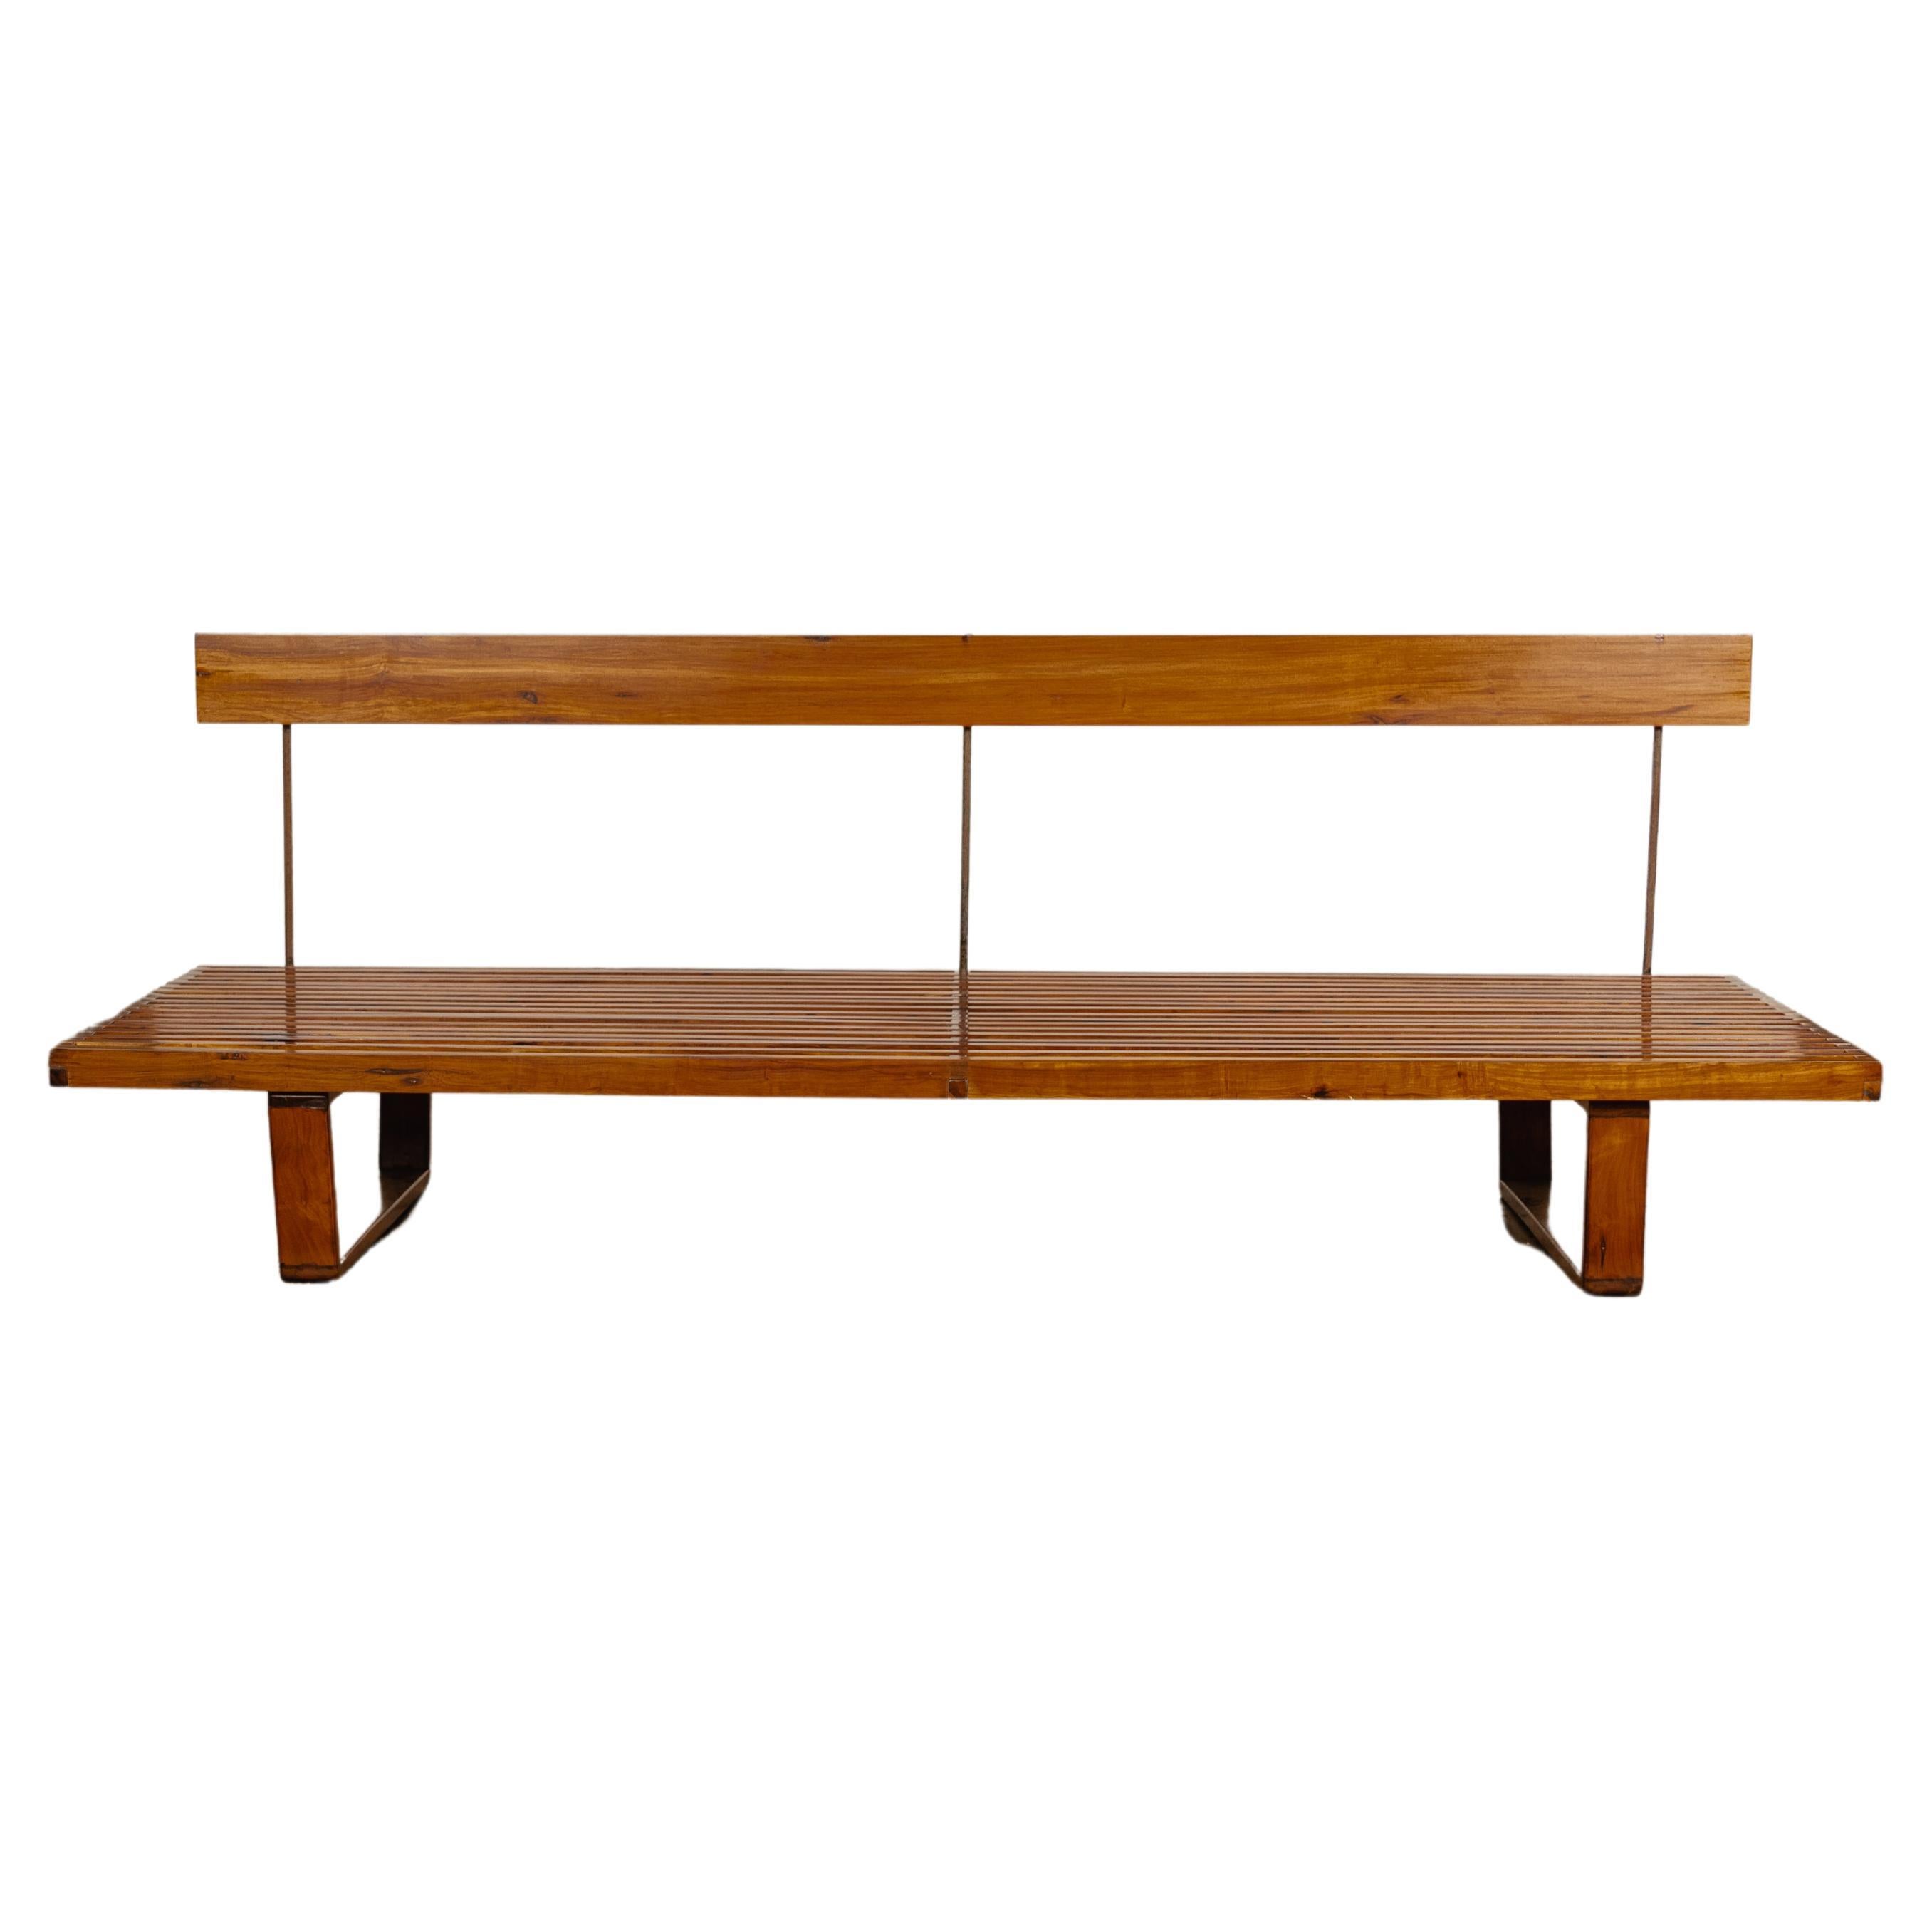 Rare slatted bench by Martin Eisler For Sale